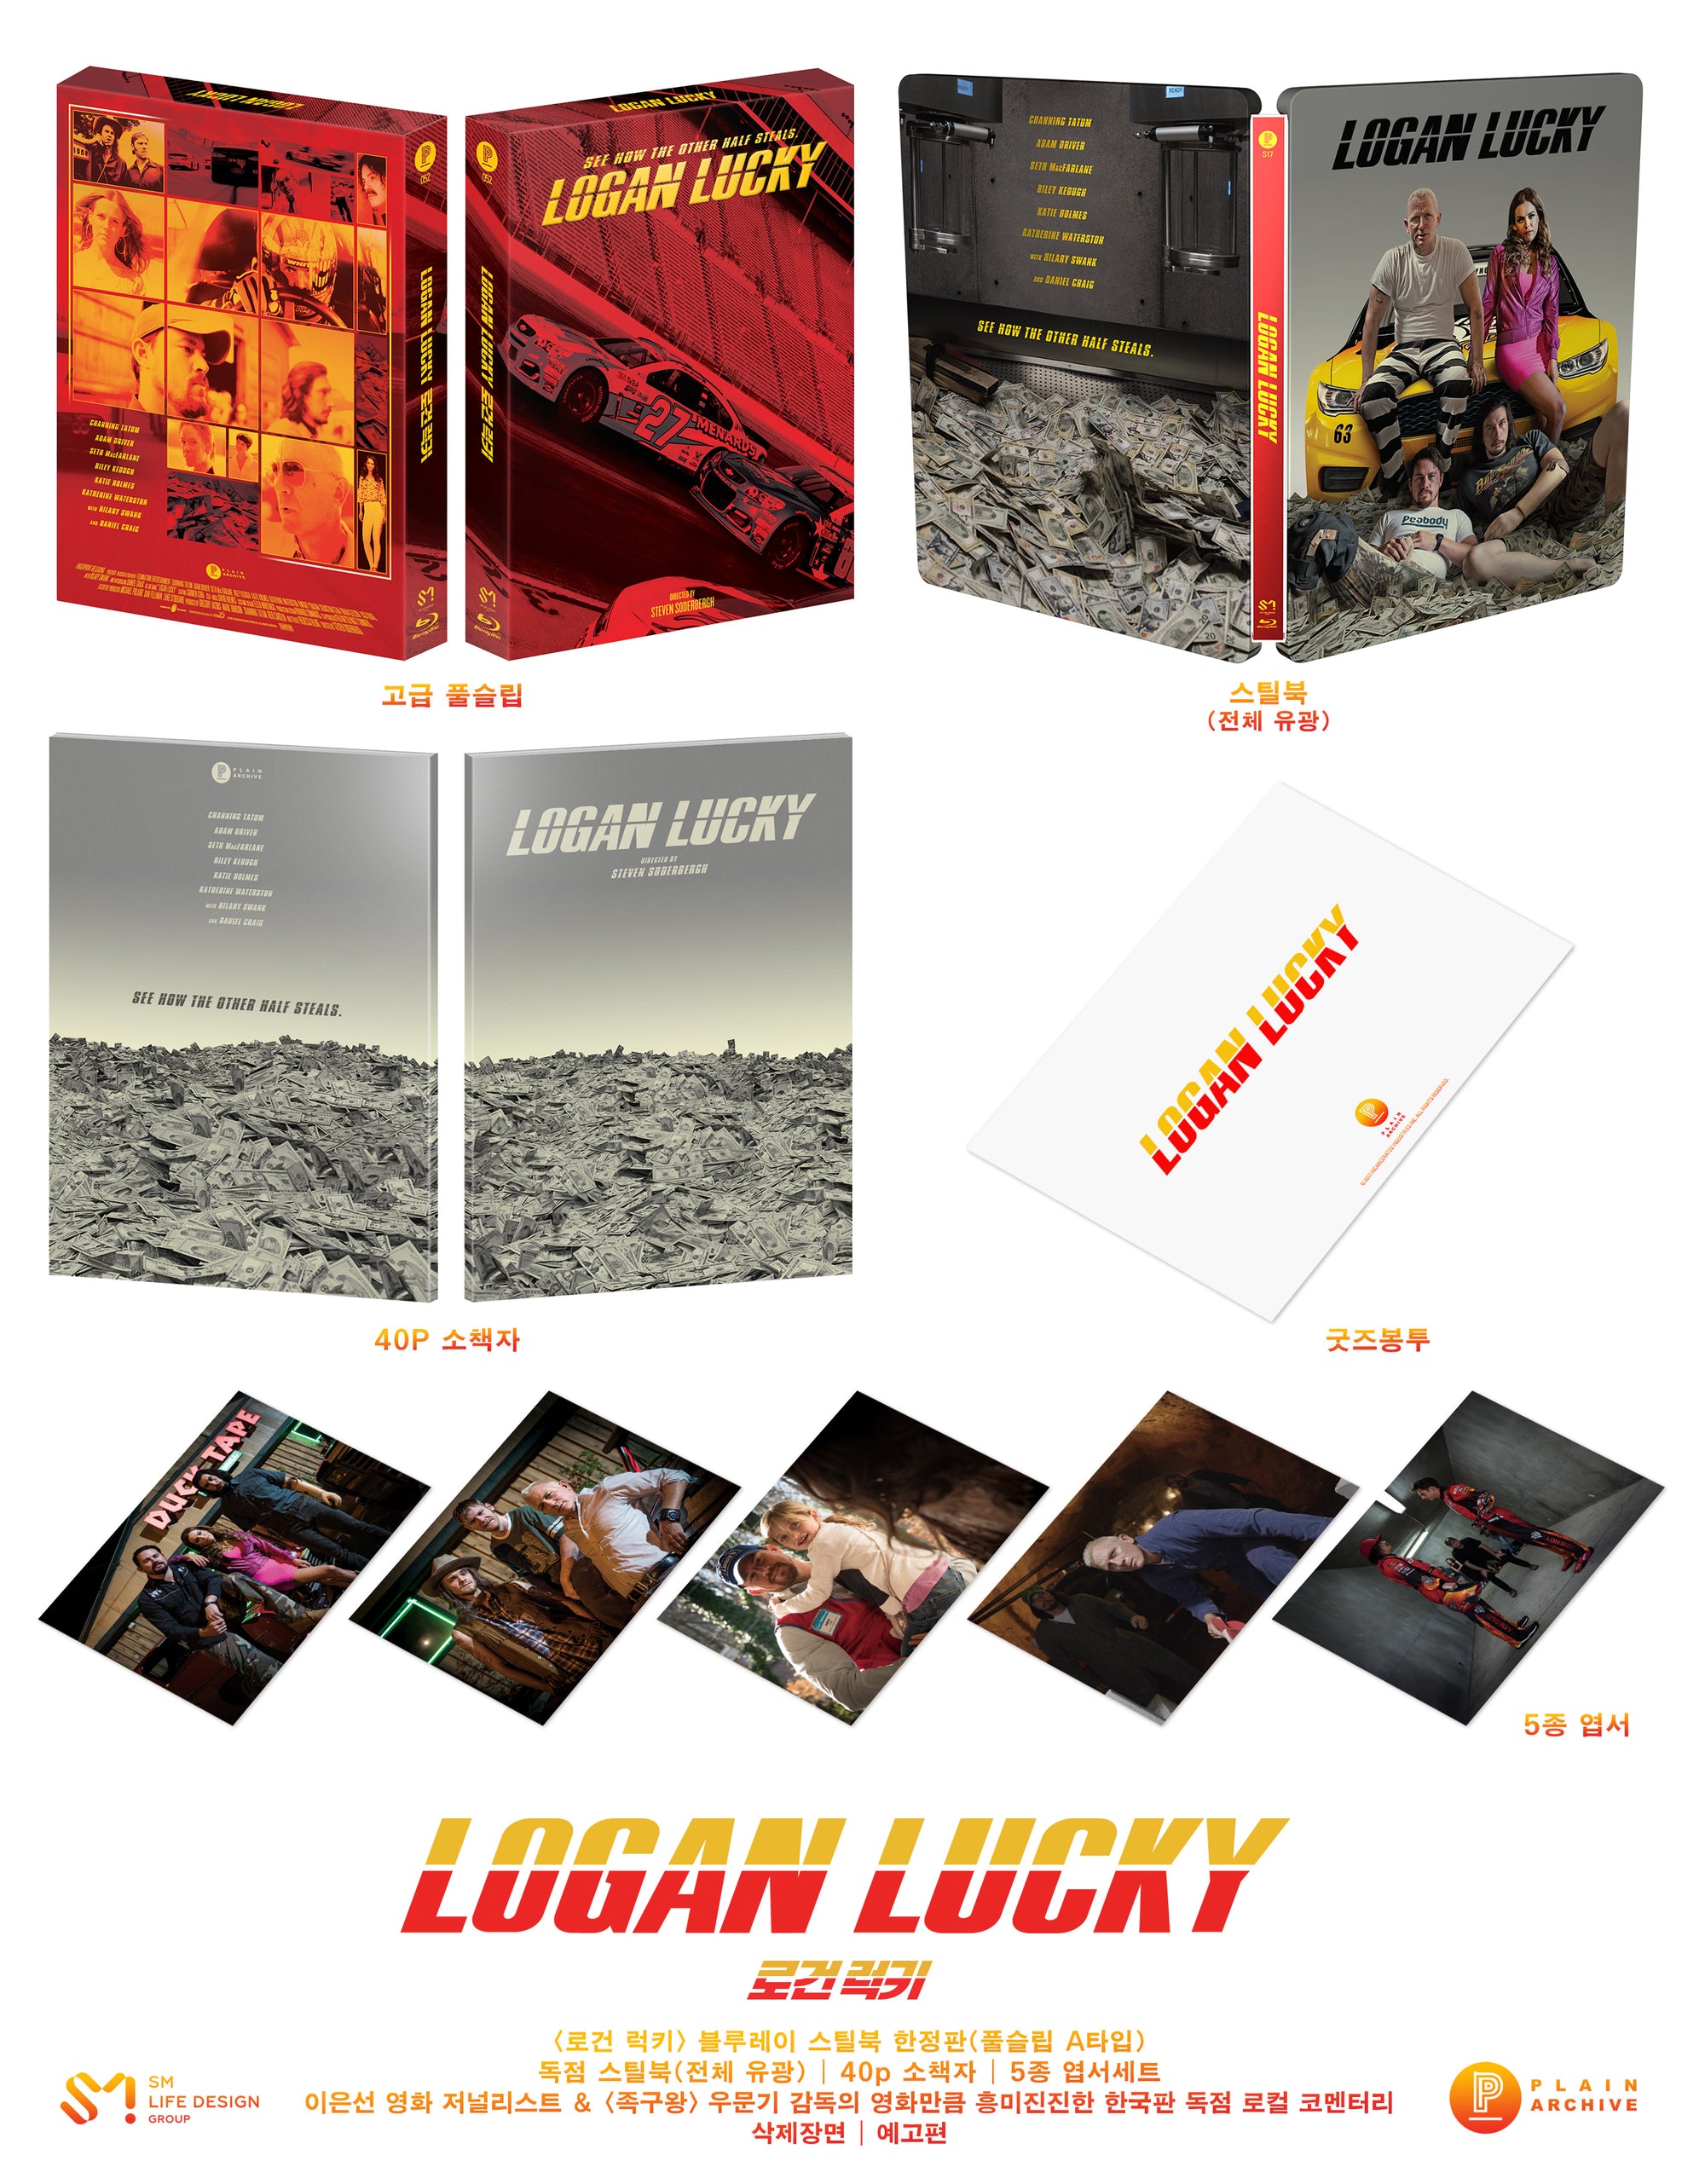 LOGAN LUCKY Blu-ray Steelbook: Triple Pack